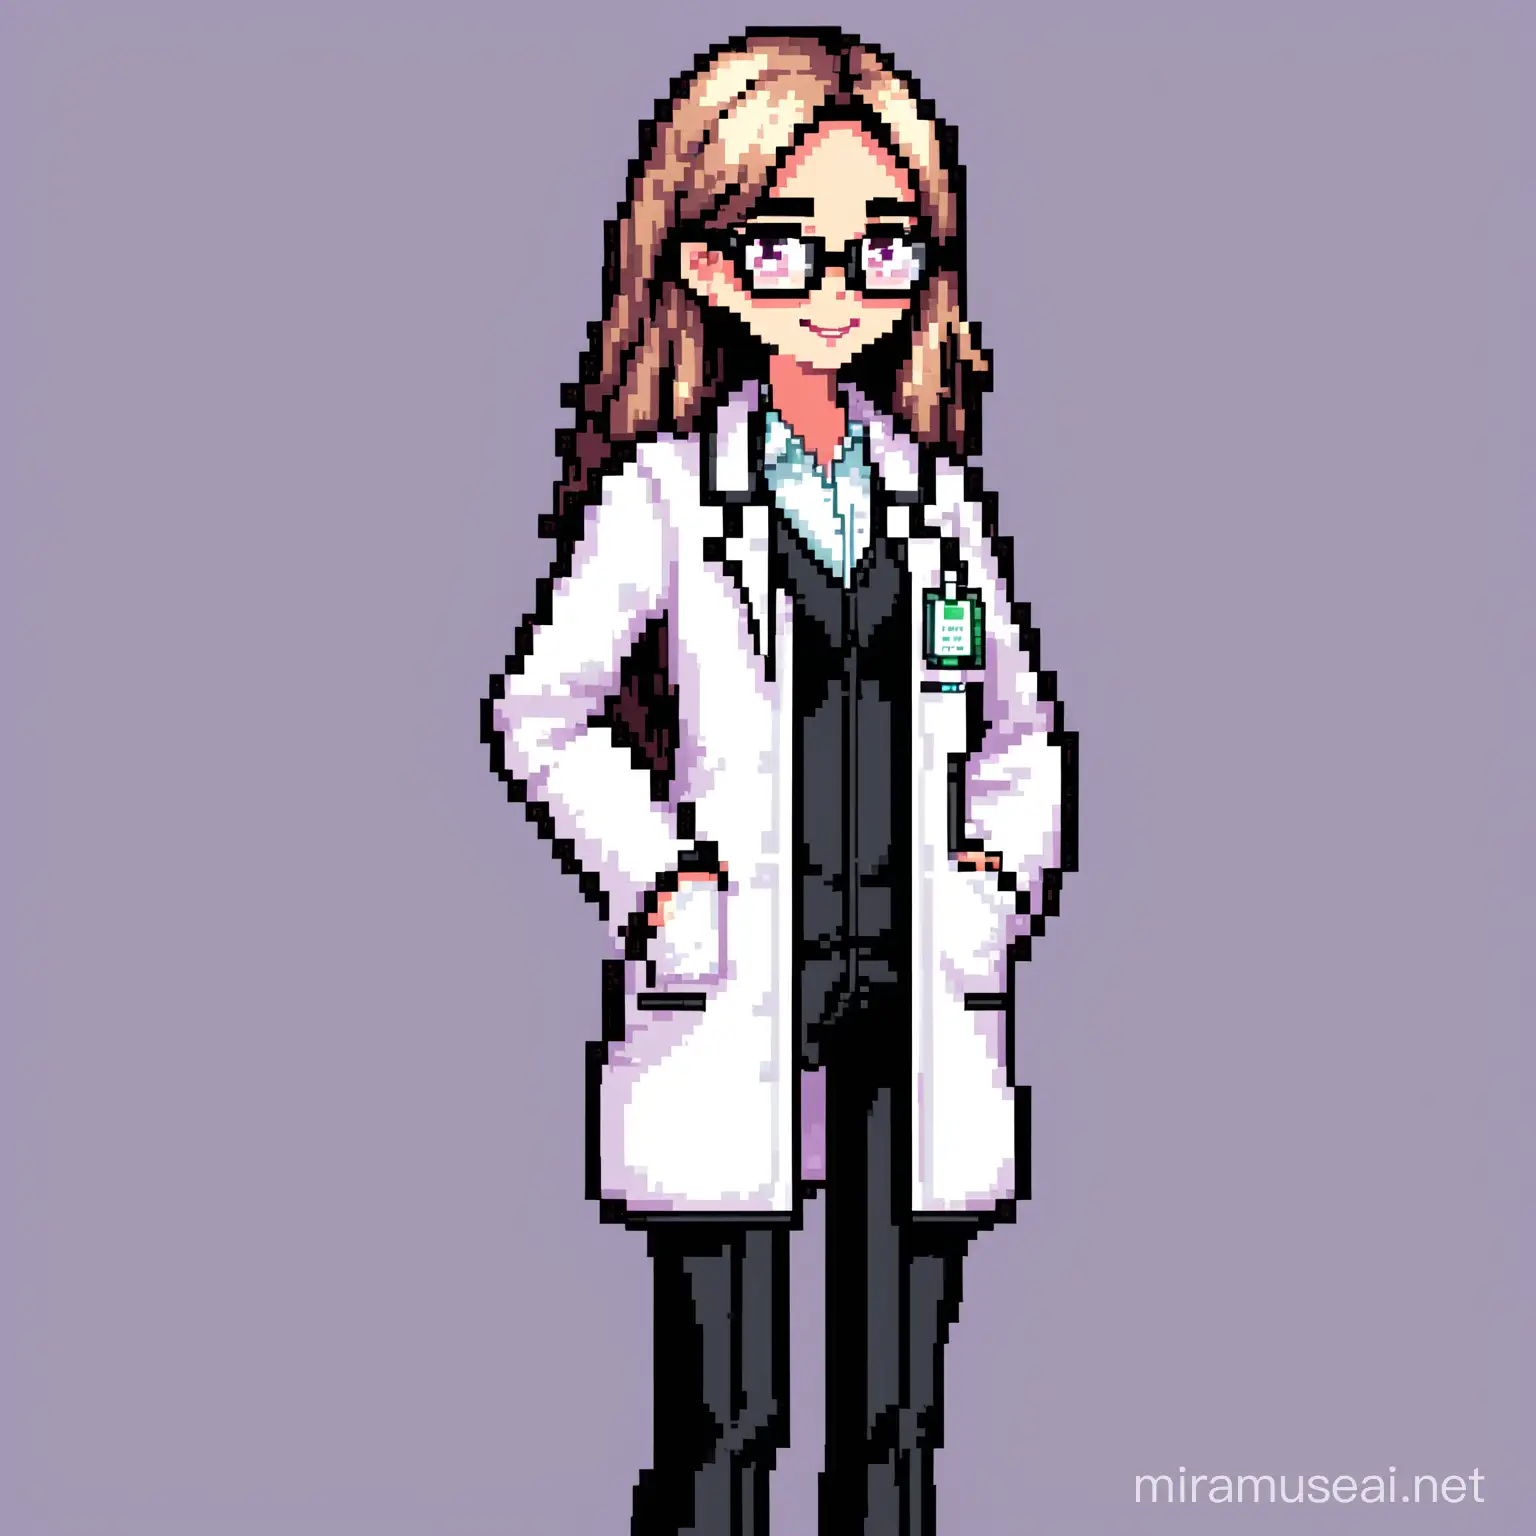 Confident Female Scientist in White Lab Coat with Reading Glasses